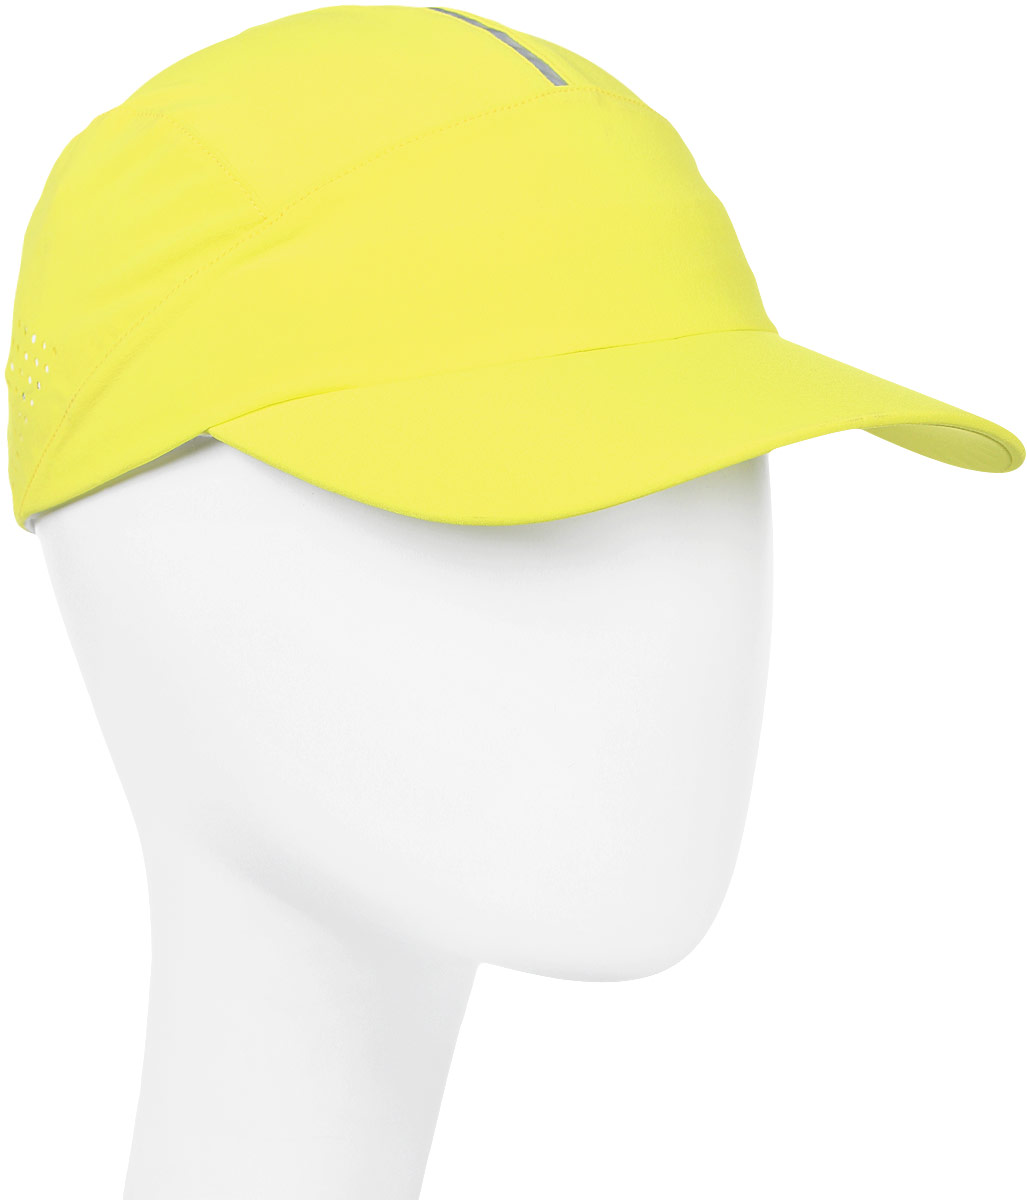 Бейсболка мужская Asics Running Cap, цвет: желтый. 155010-0486. Размер 56